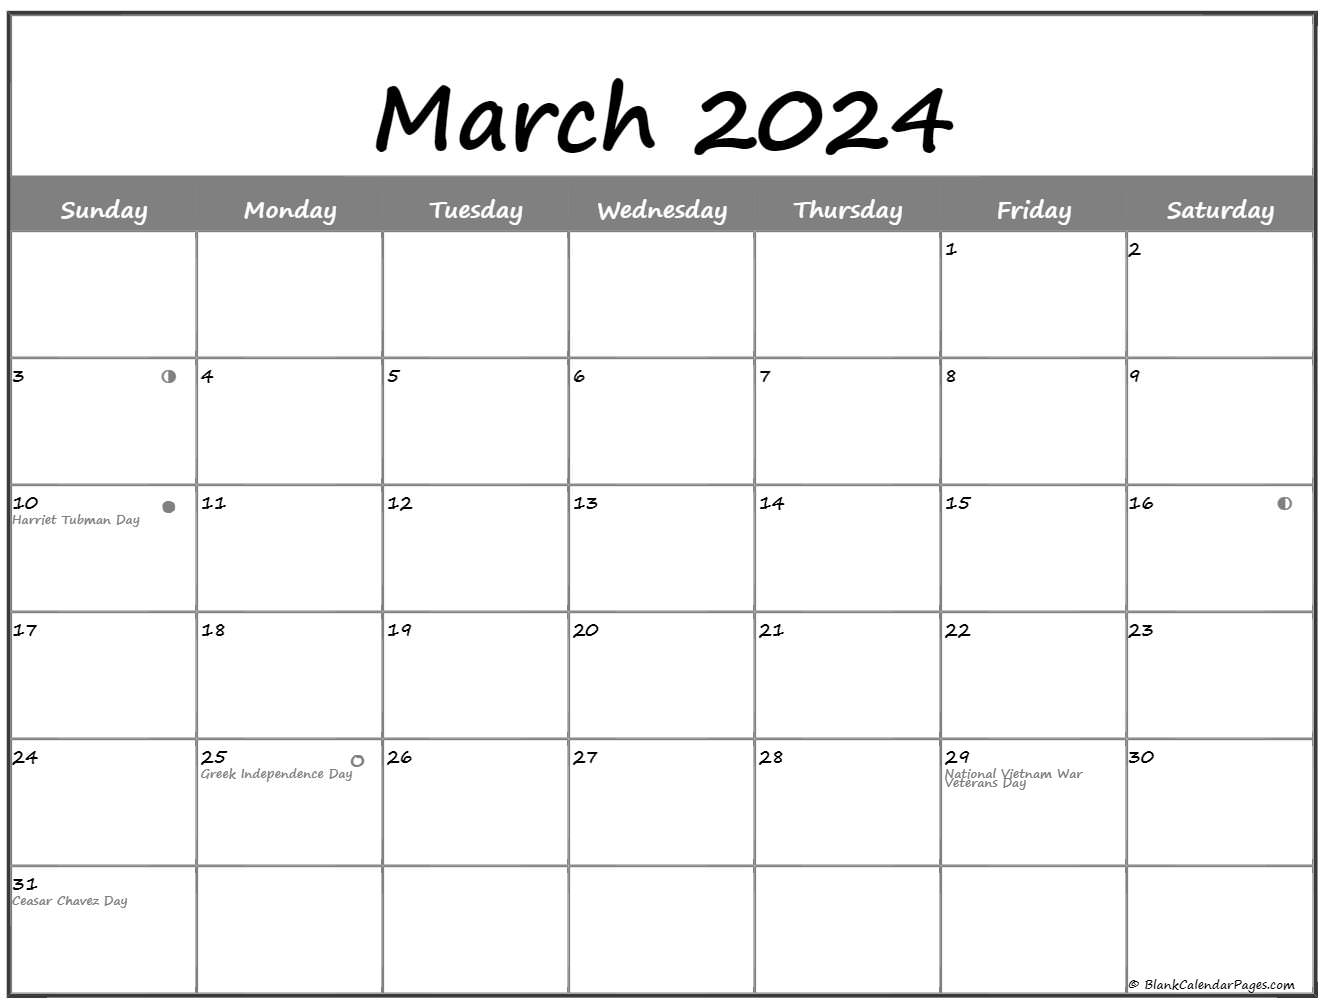 March 2024 Calendar Printable With Holidays Calendar Mella Evelina